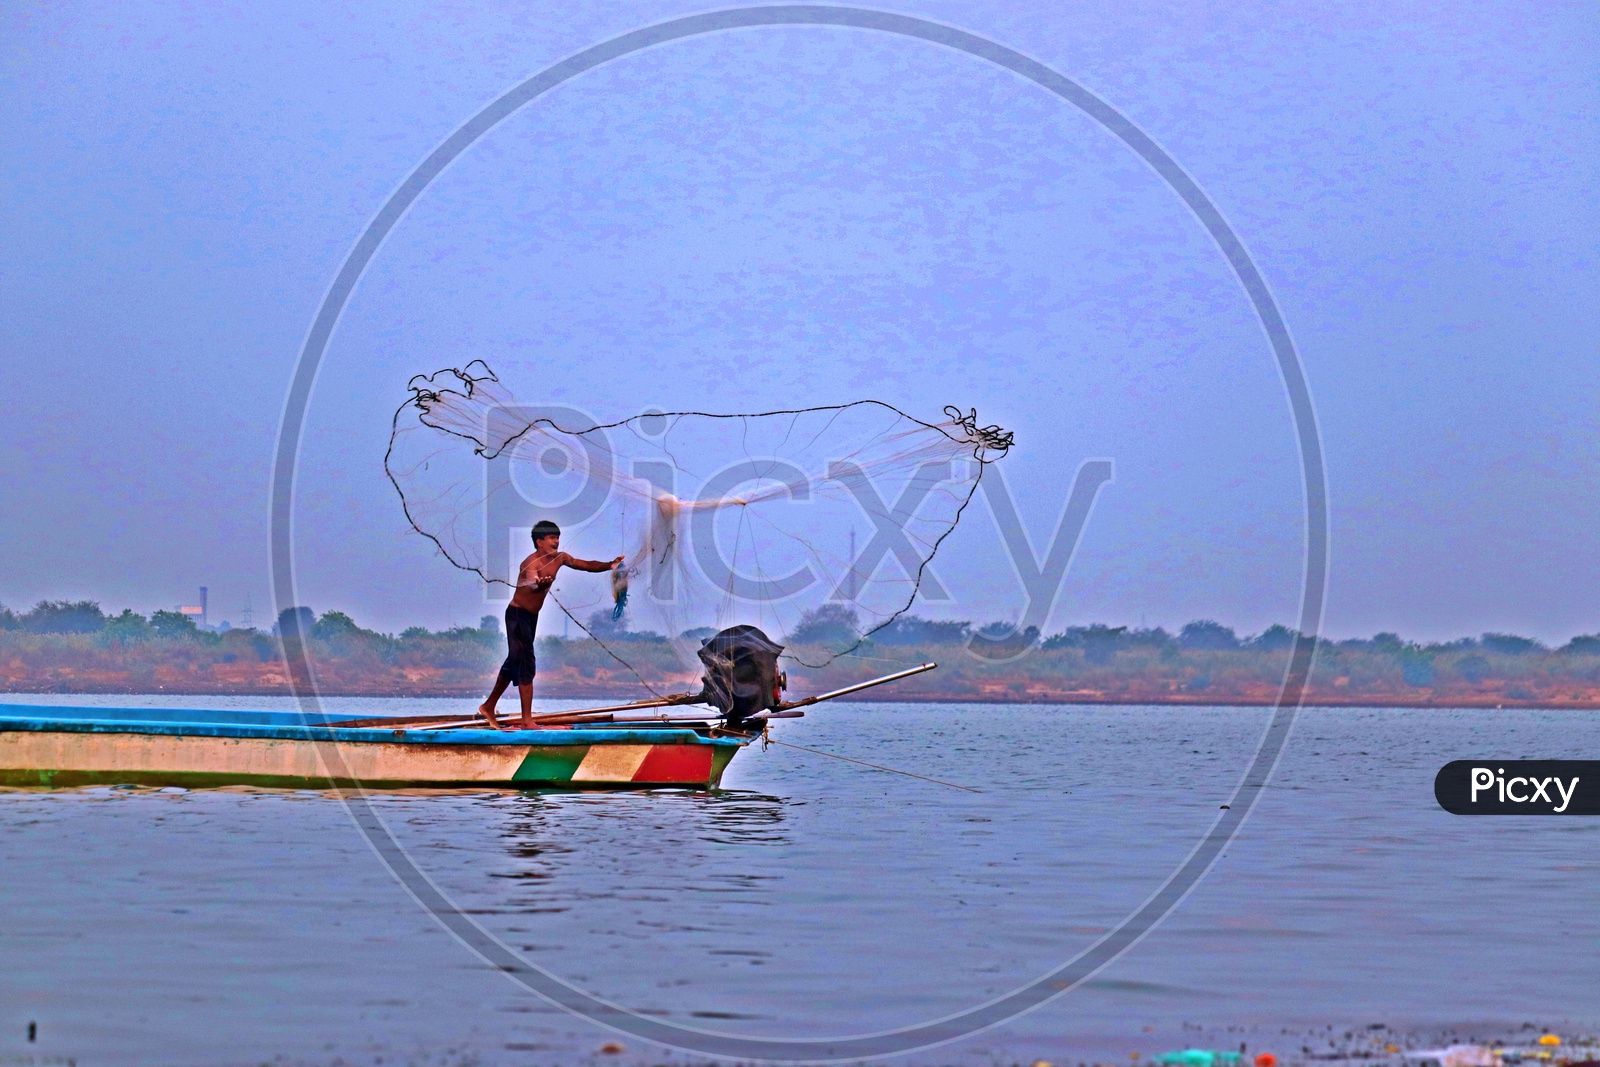 fishermen spinning his kind of web for livelihood !